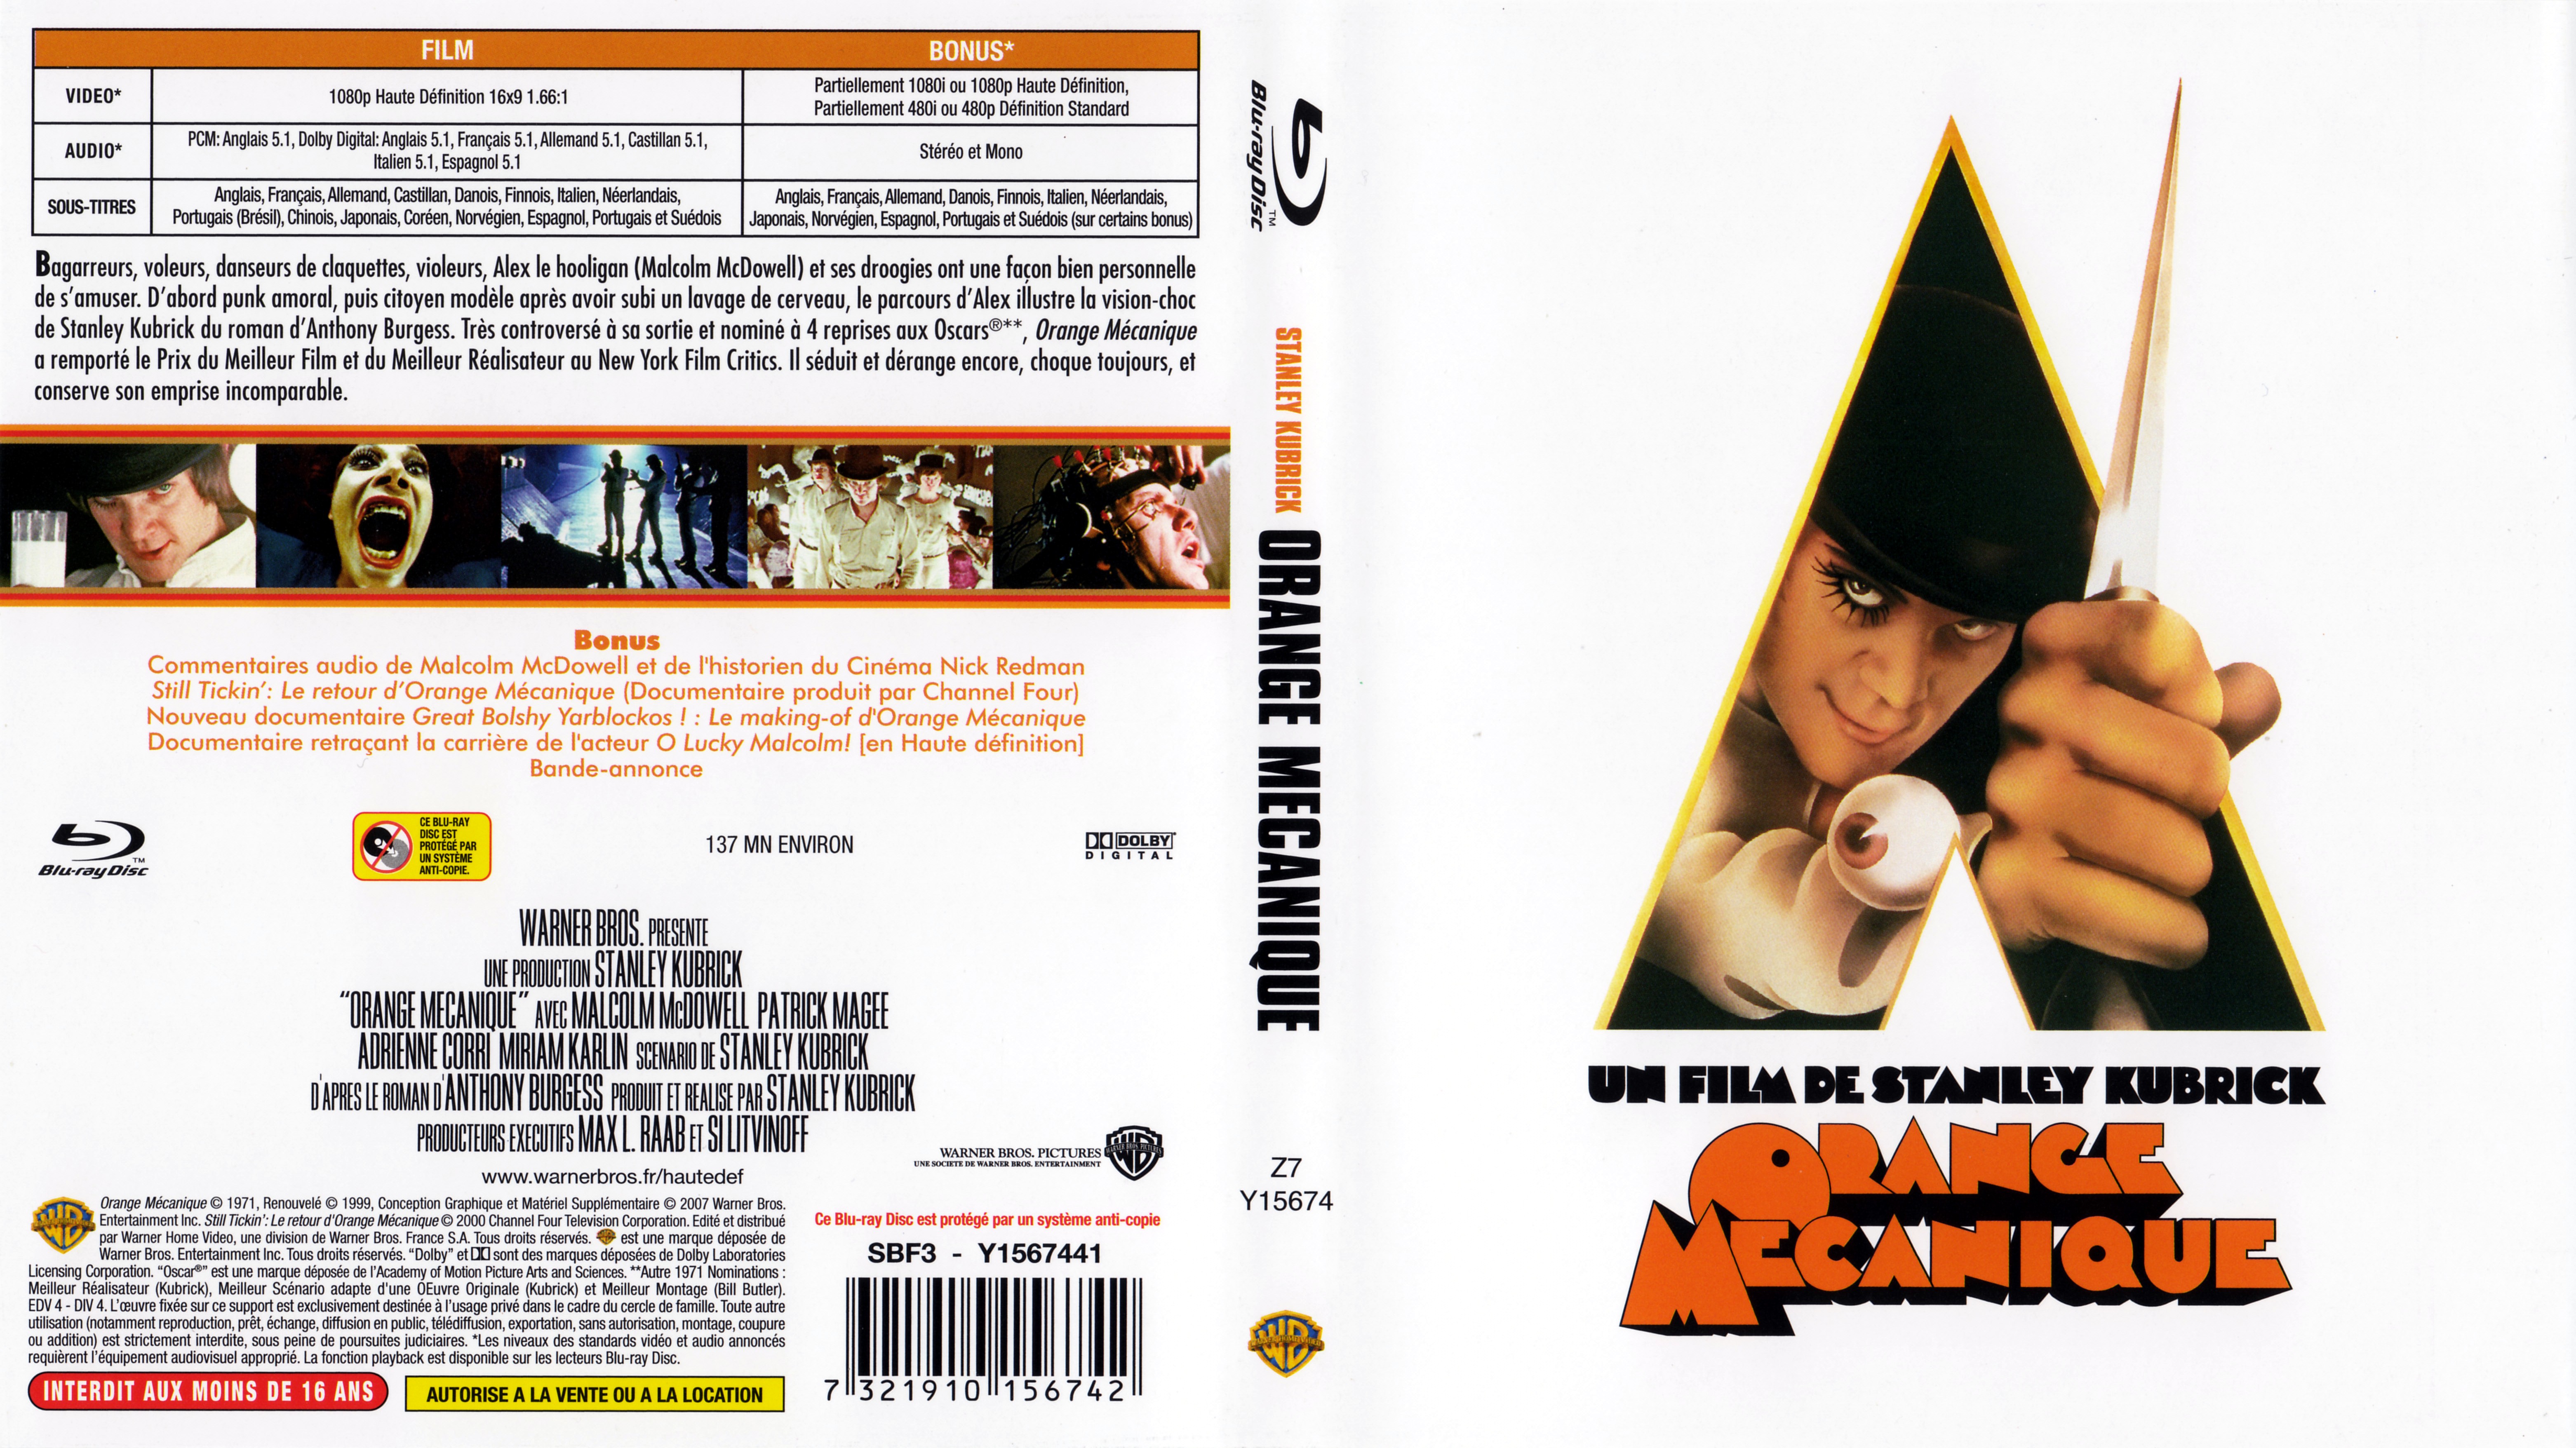 Jaquette DVD Orange mcanique (BLU-RAY) v2